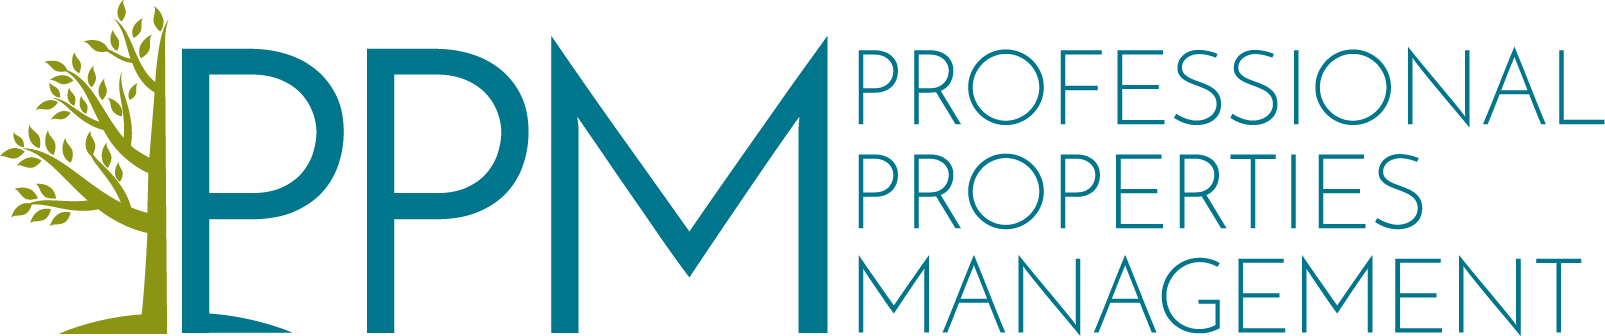 Professional Properties Management logo